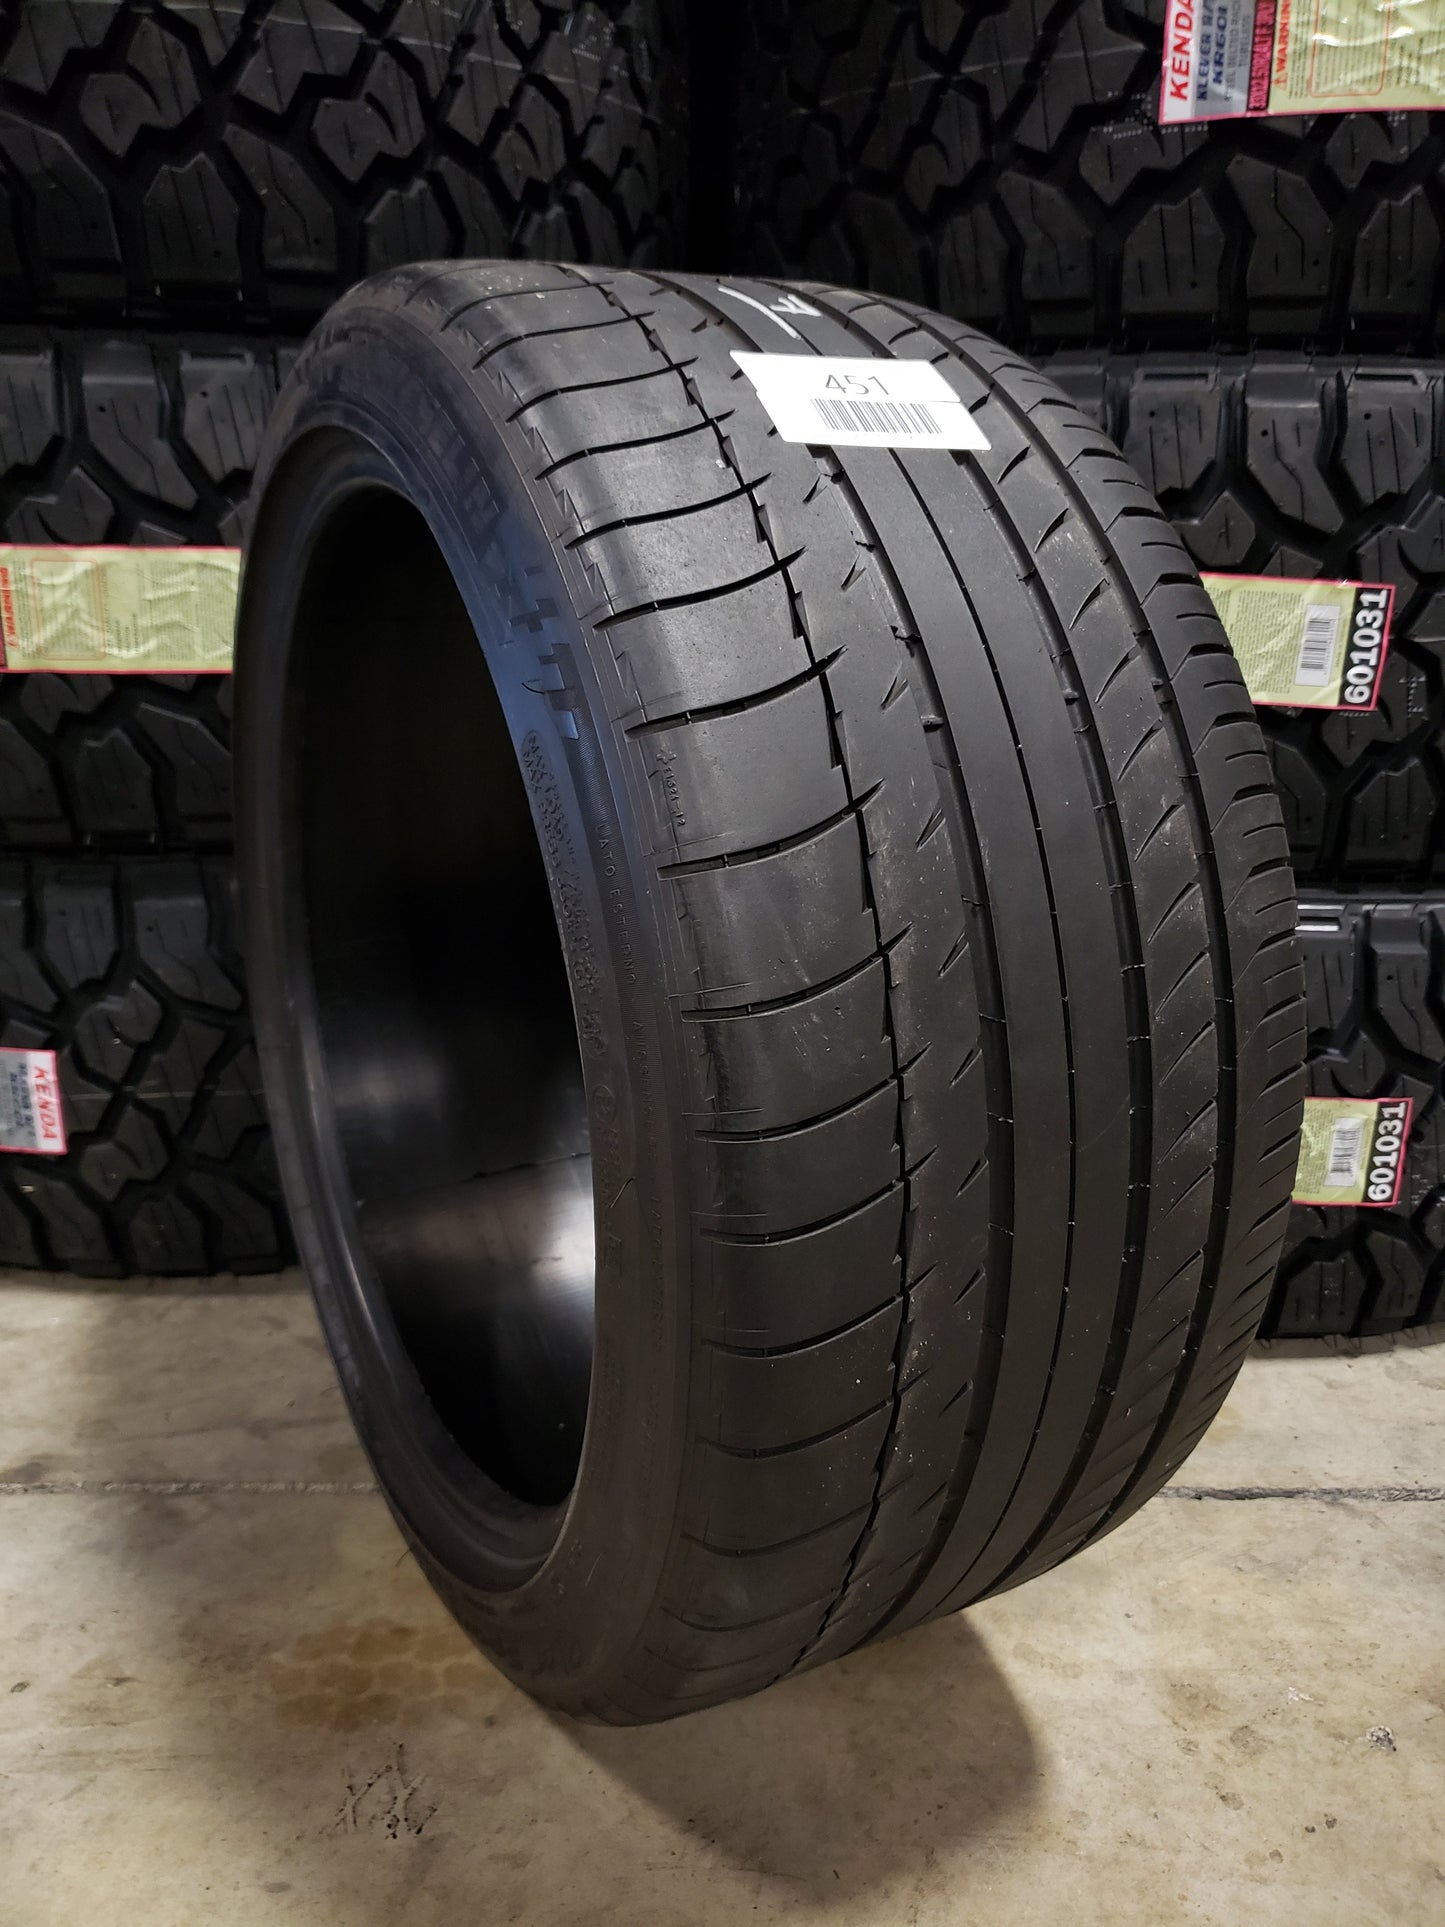 SINGLE 285/35R19 Michelin Pilot Sport 2 99 Y XL - Used Tires